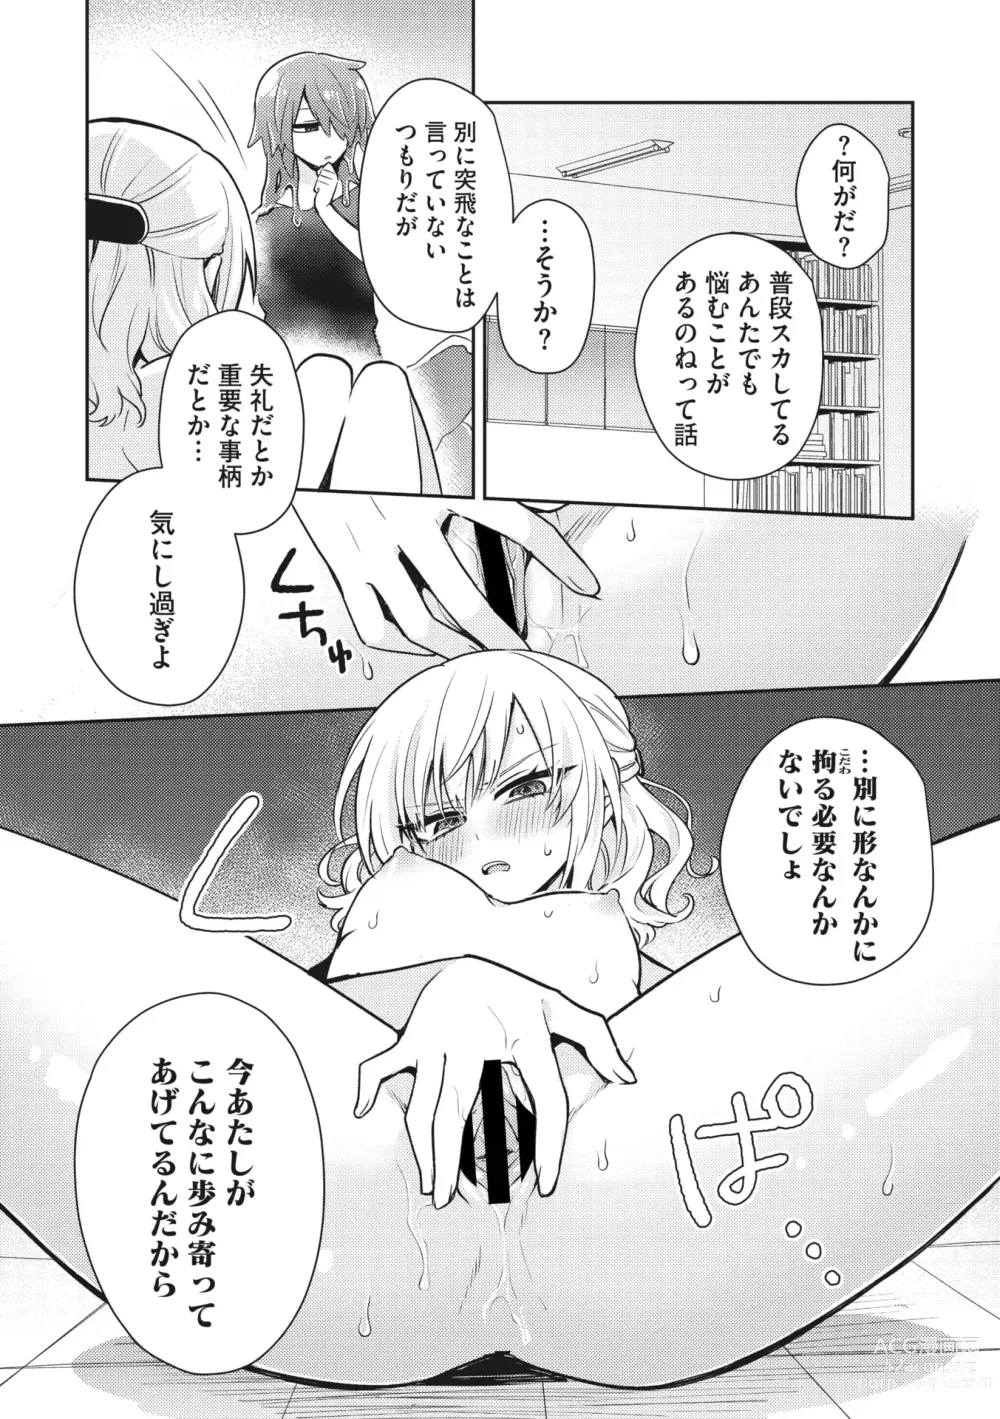 Page 106 of manga COMIC GAIRA Vol. 16